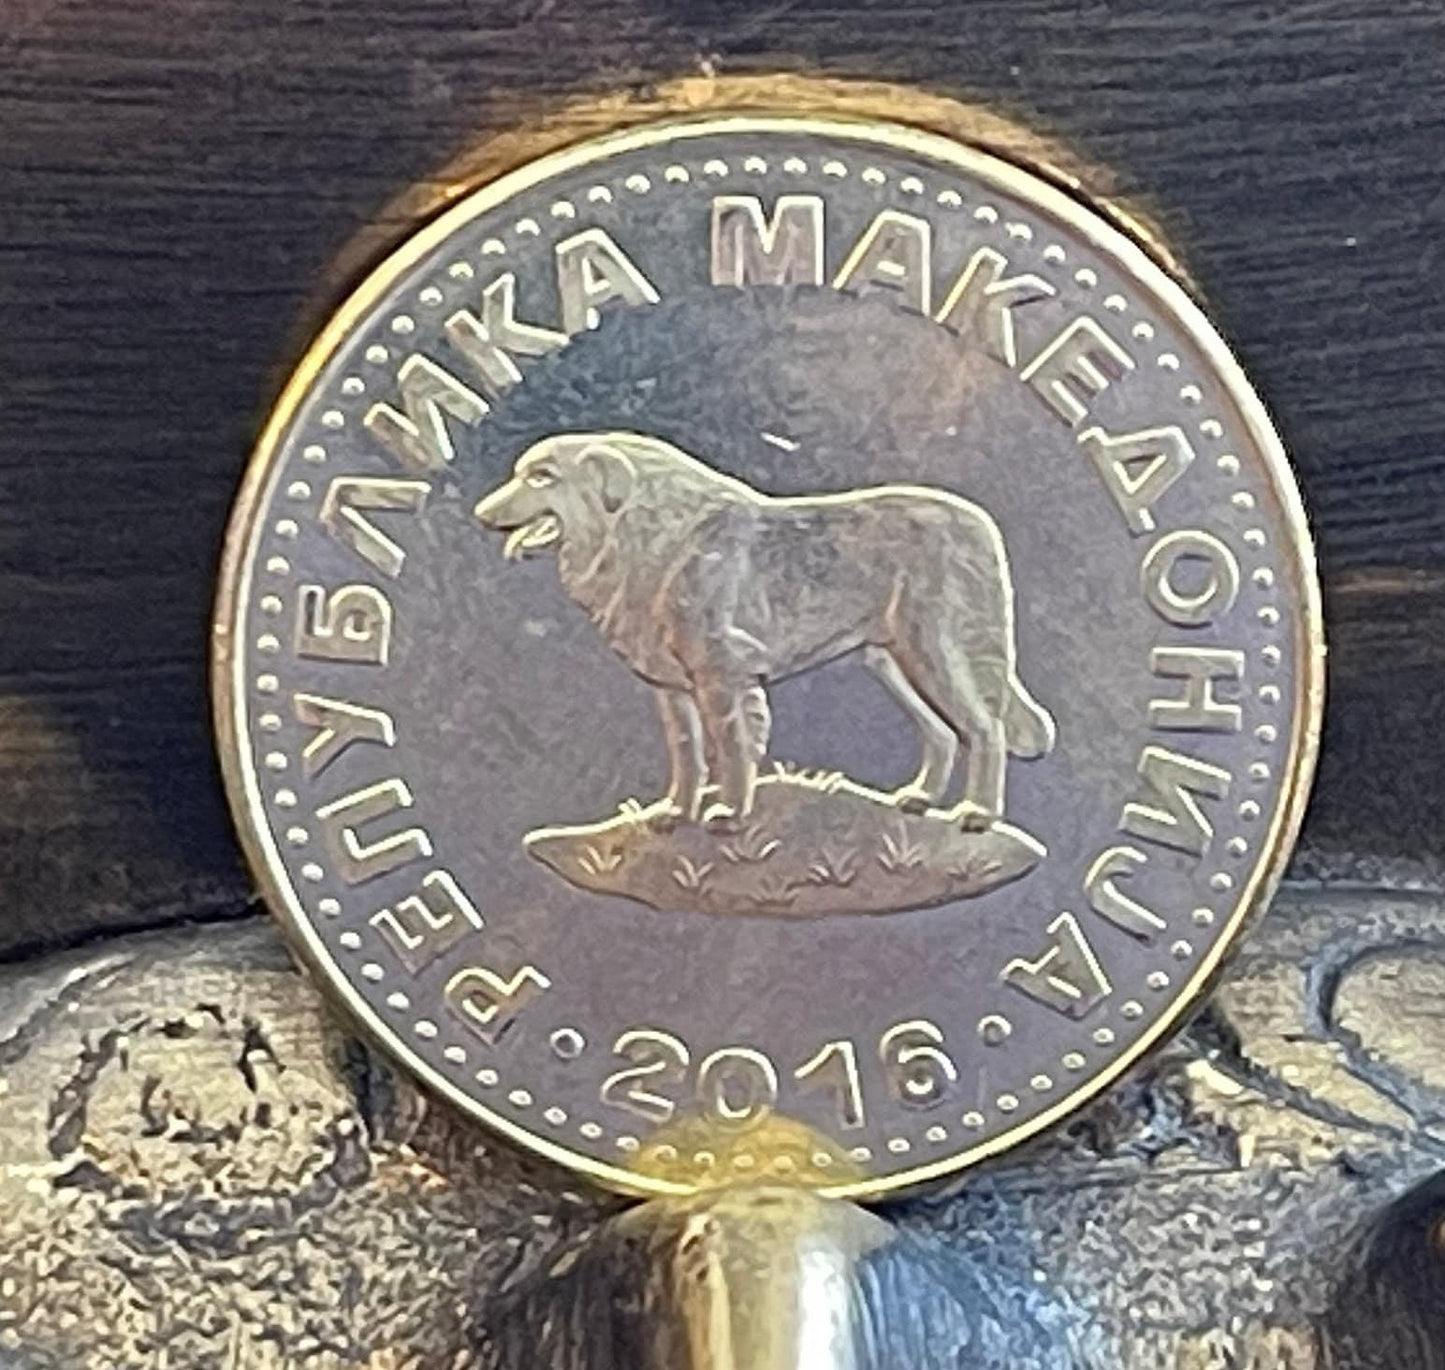 Sarplaninac Shepherd Dog Macedonia 1 Denar Authentic Coin Money for Jewelry and Craft Making